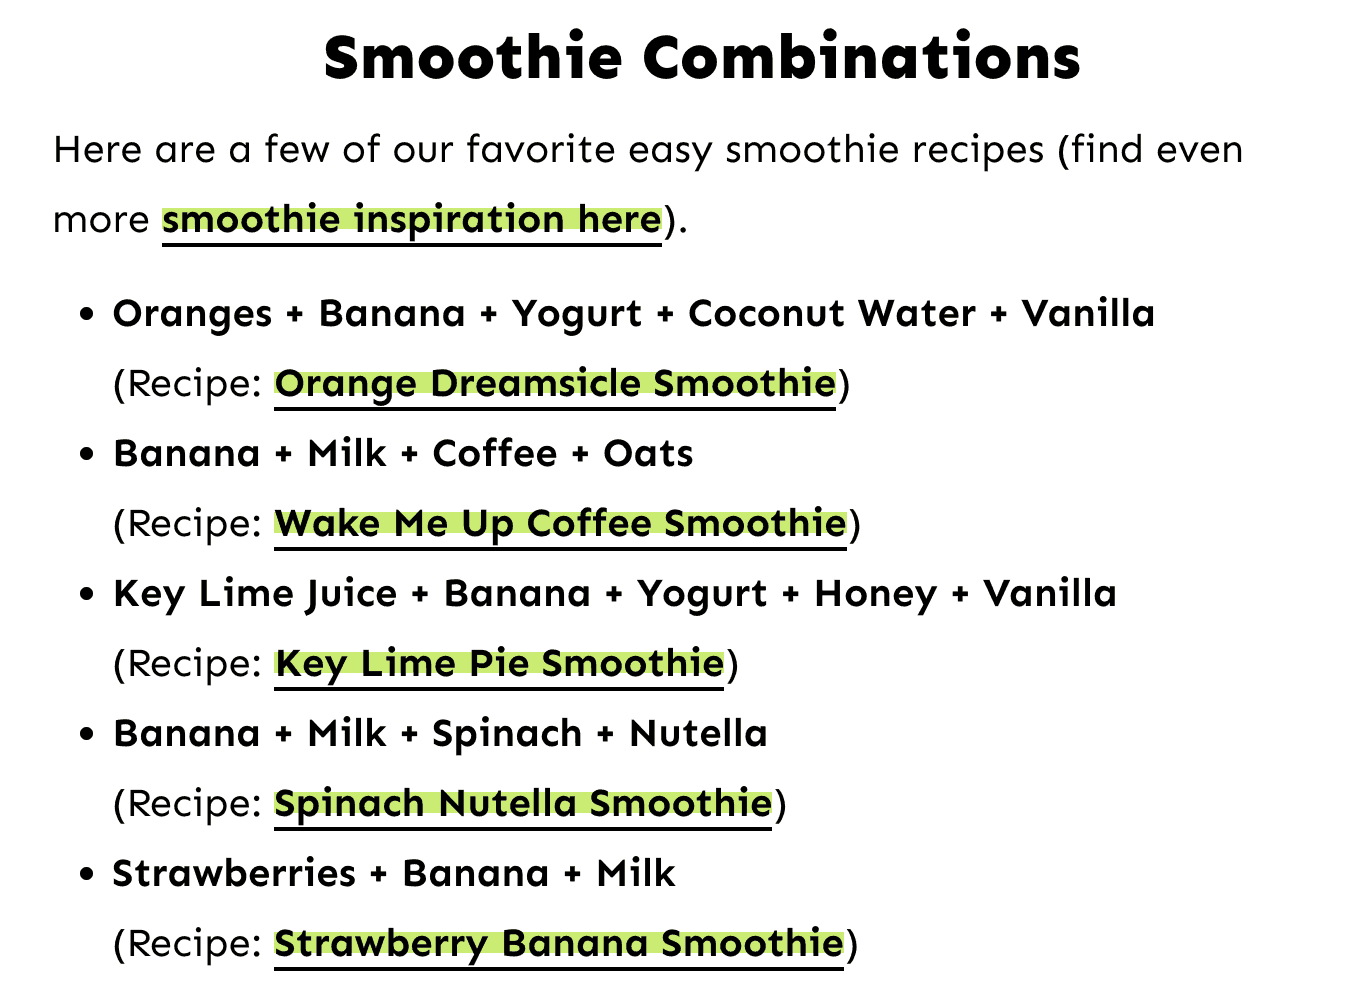 Smoothie recipes content